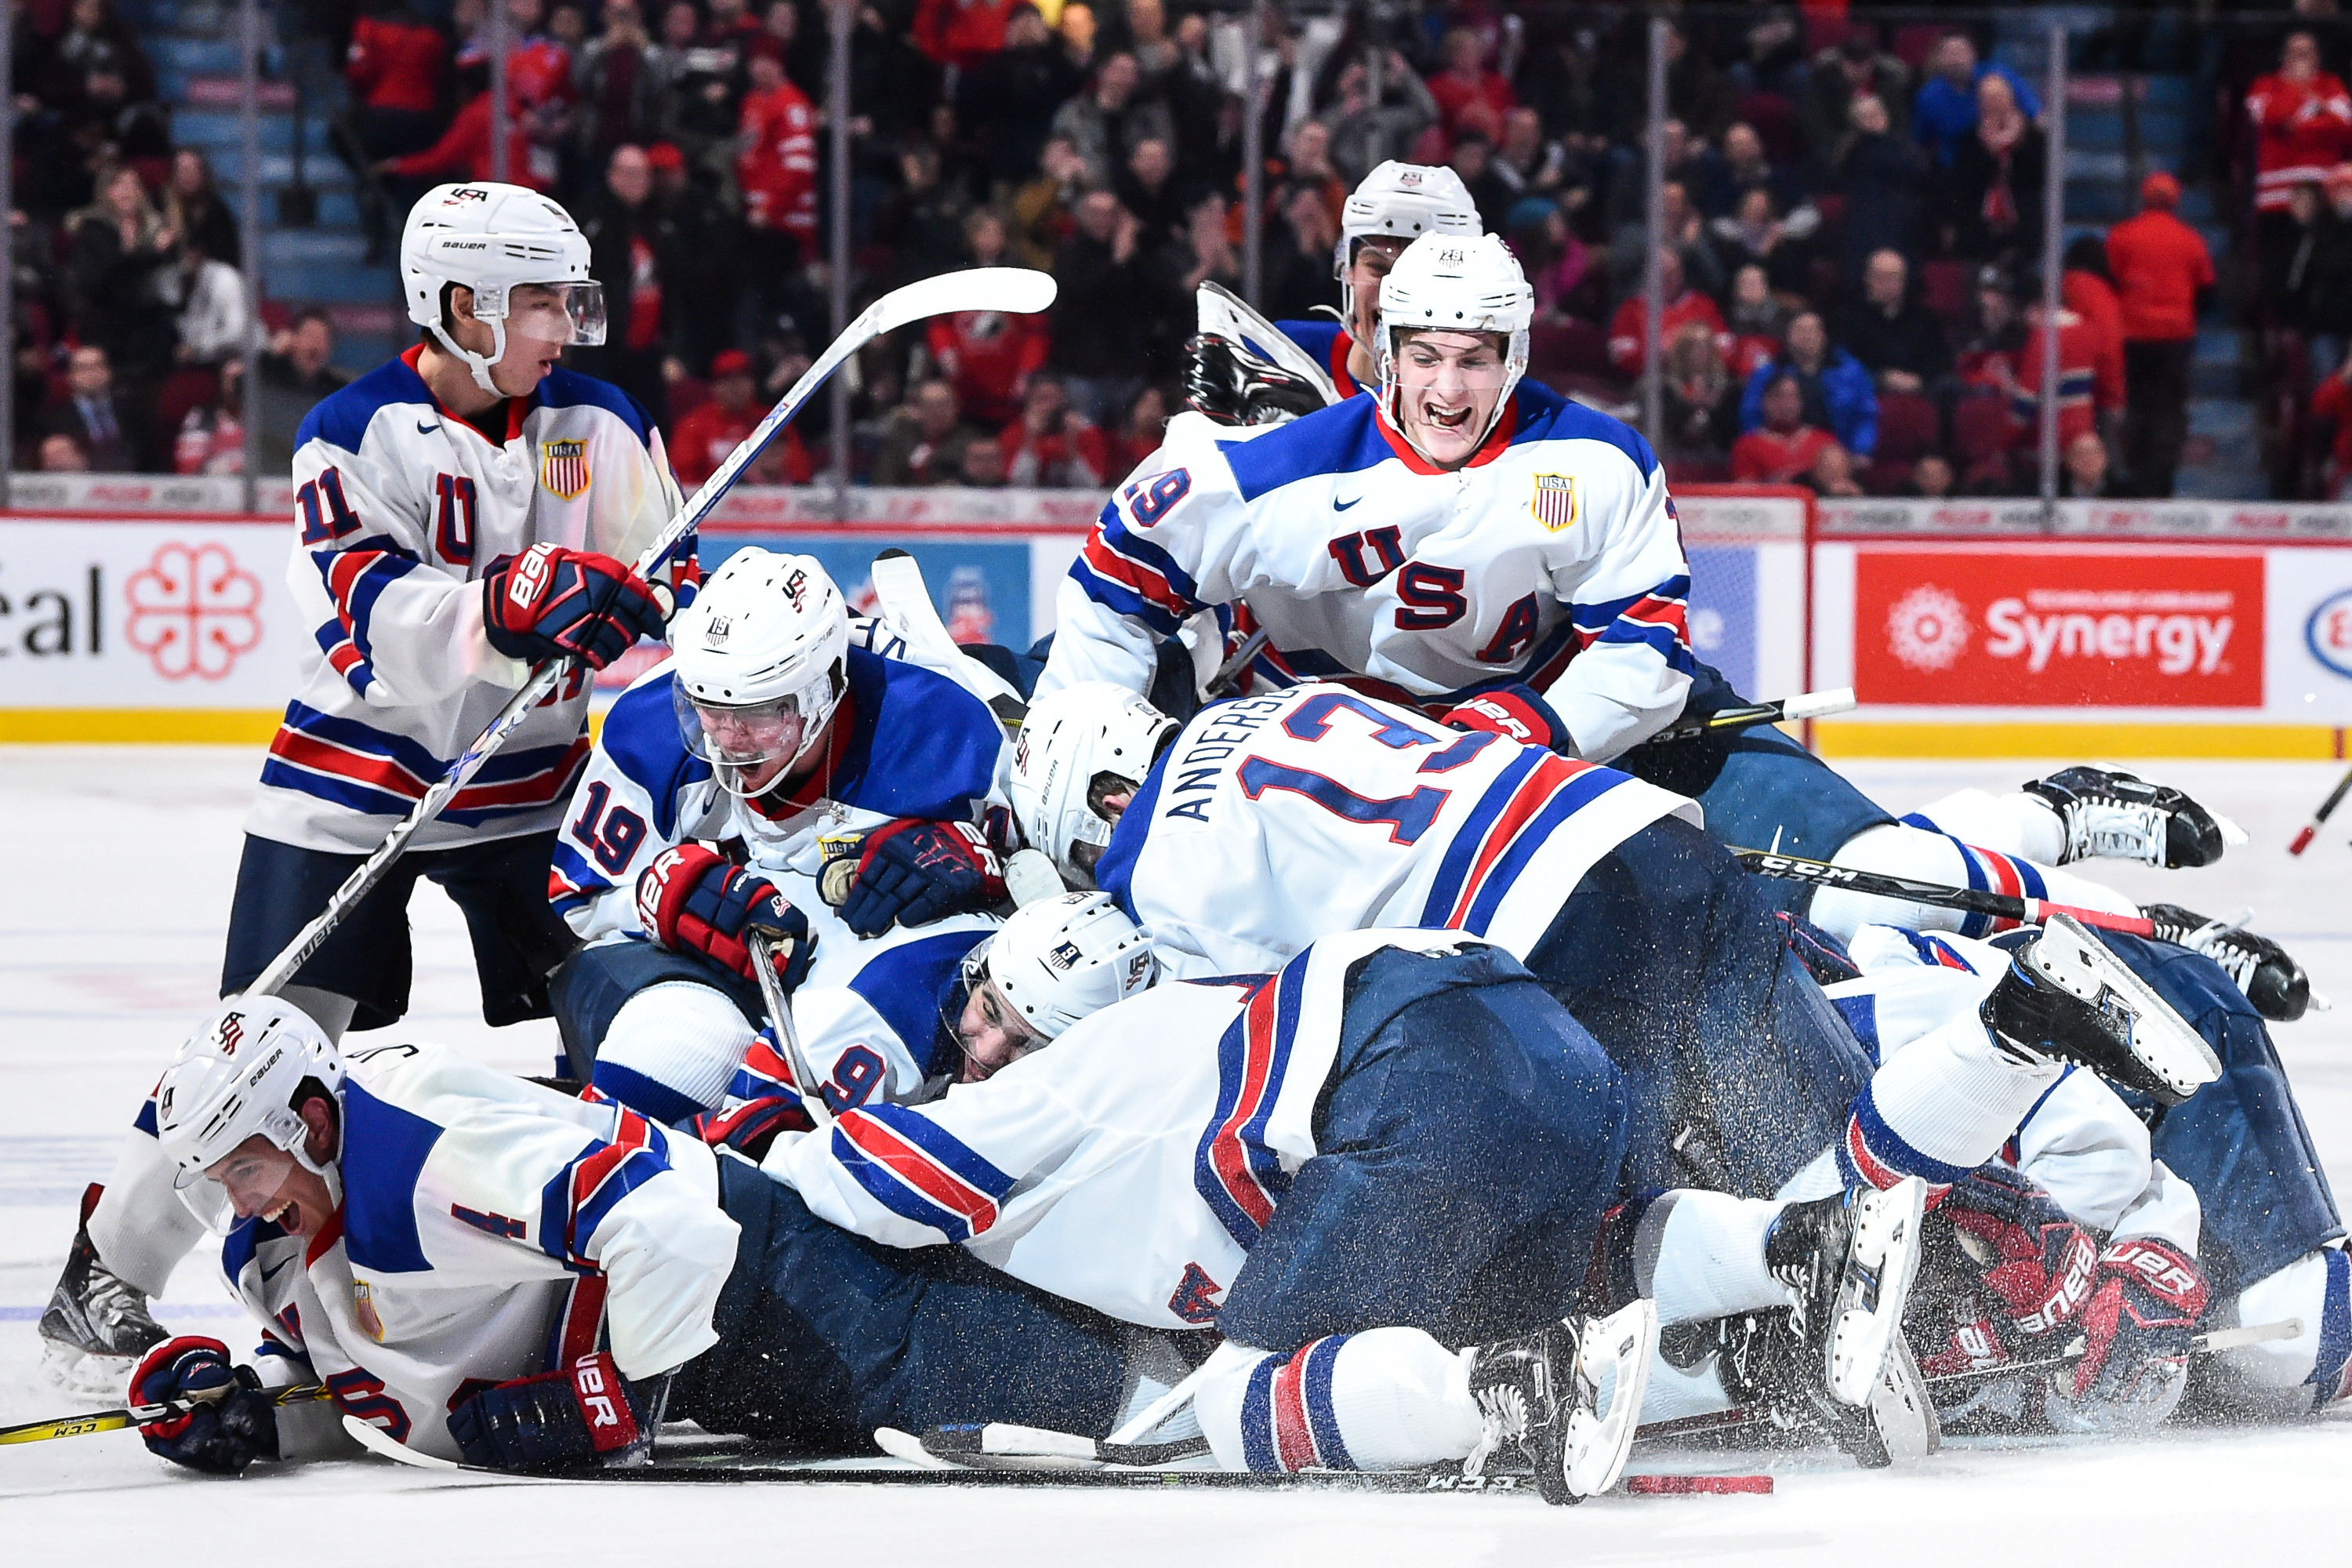 US tops Russia 4-3 in world junior hockey semifinal shootout | wgrz.com